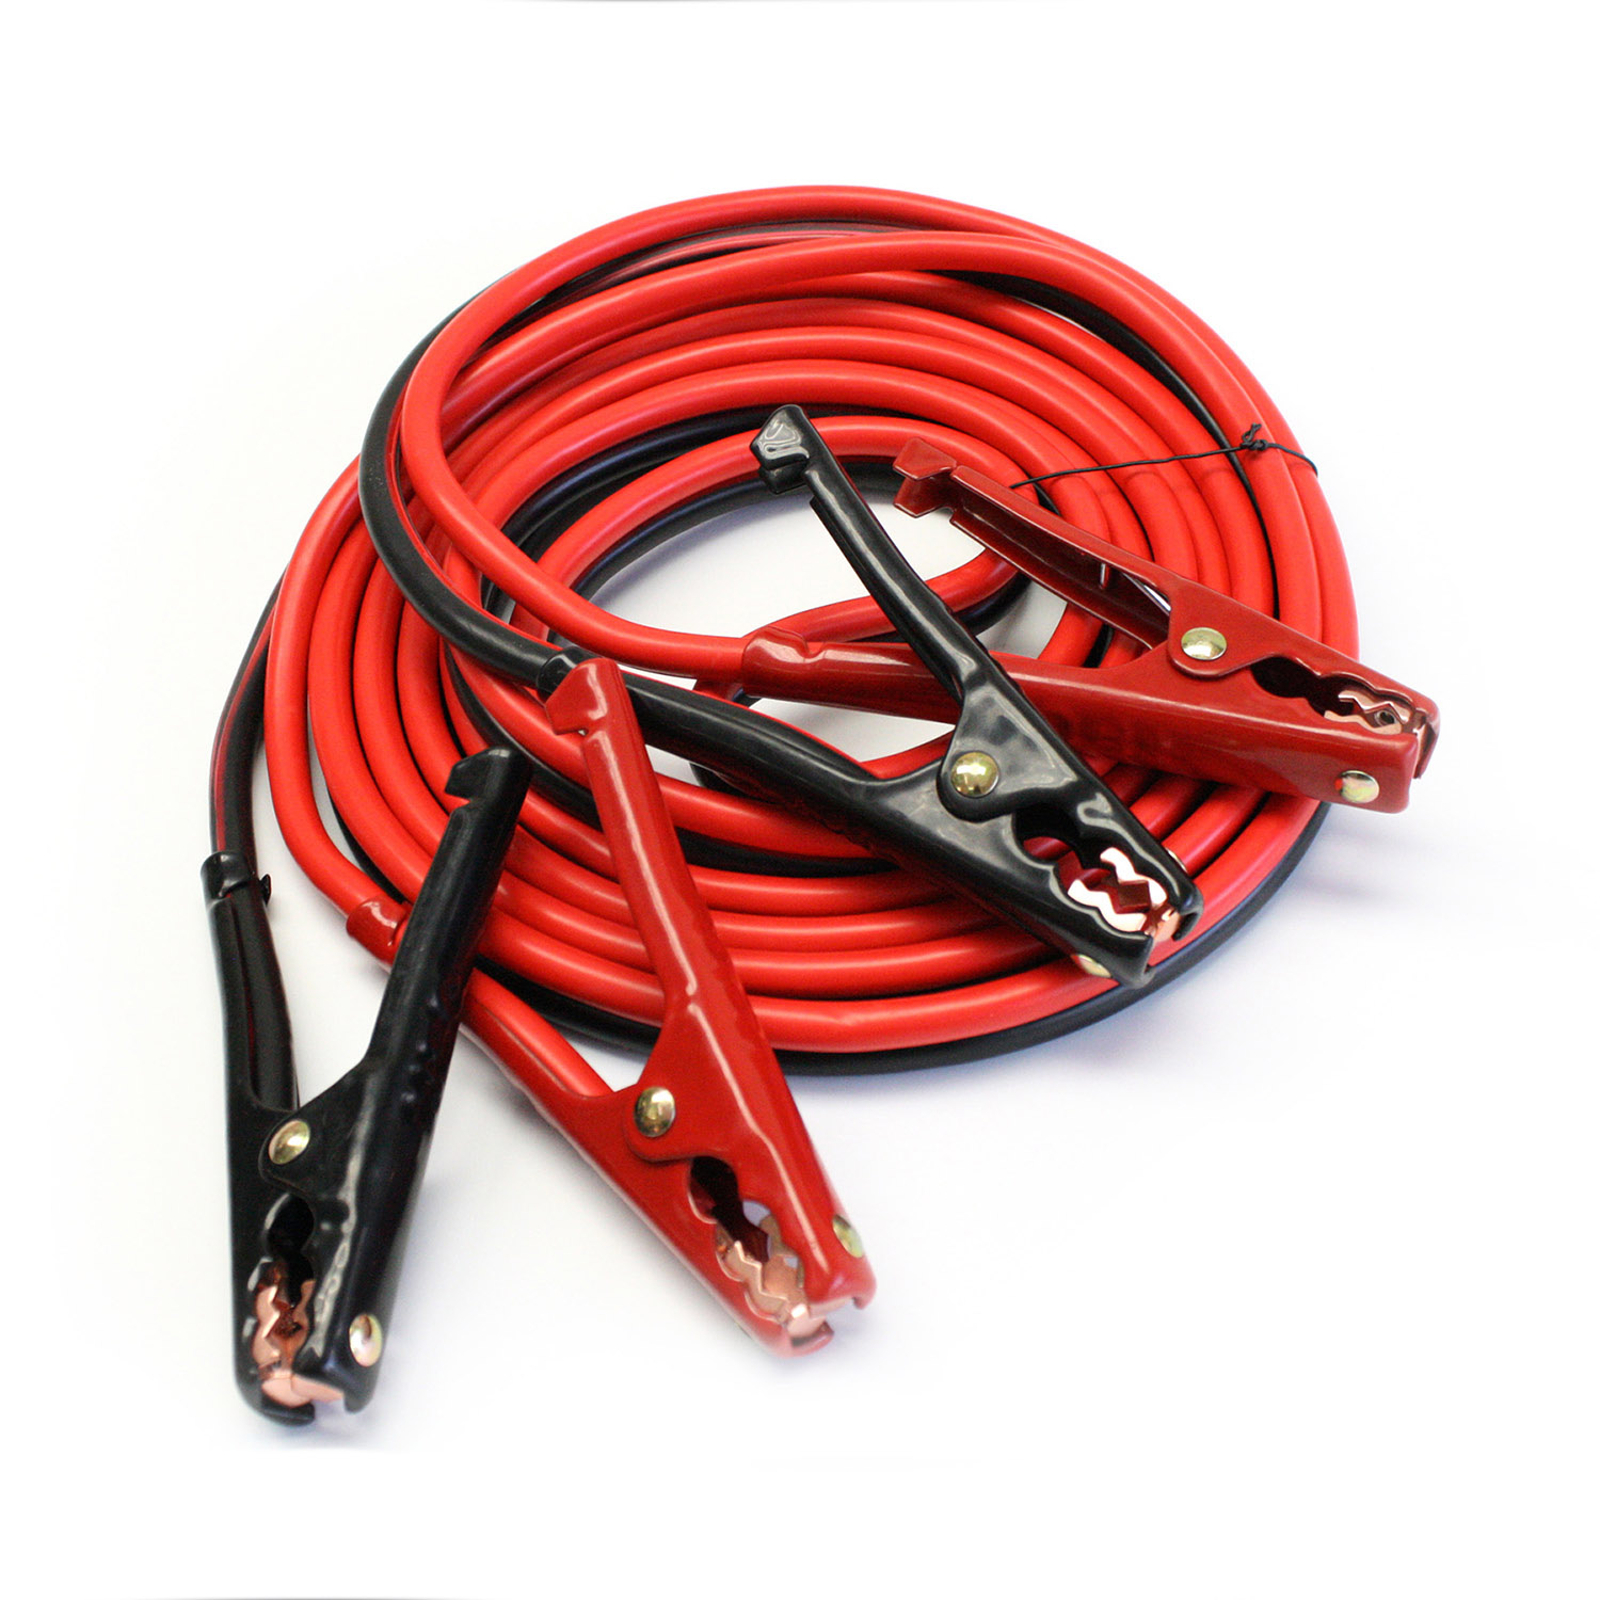 DieHard 6GA 16' Booster Cable